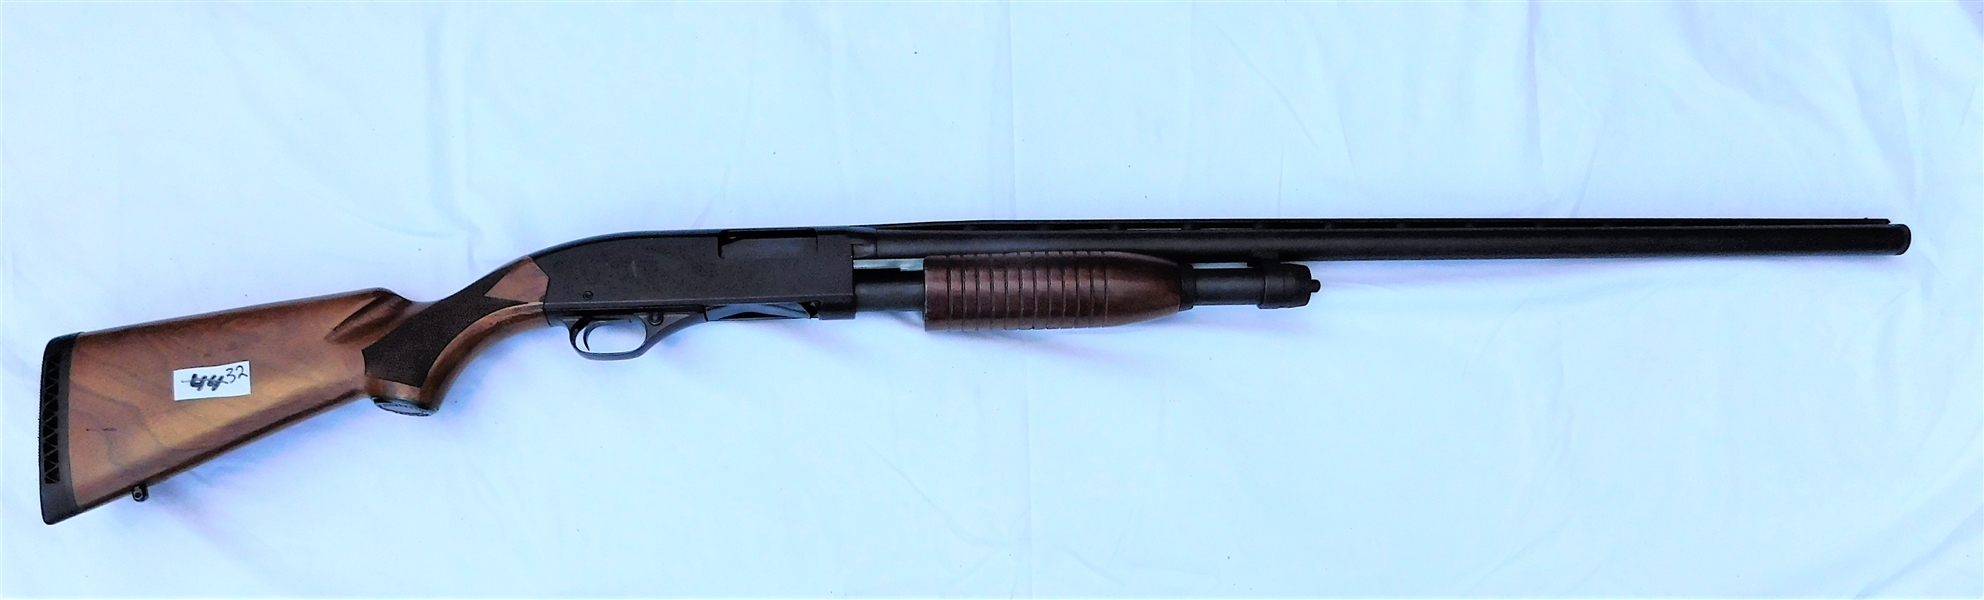 Winchester Waterfowl Model 1300 12 Gauge Pump Shotgun - Nice Engraving- Ventilated Rib - 2 3/4" and 3"